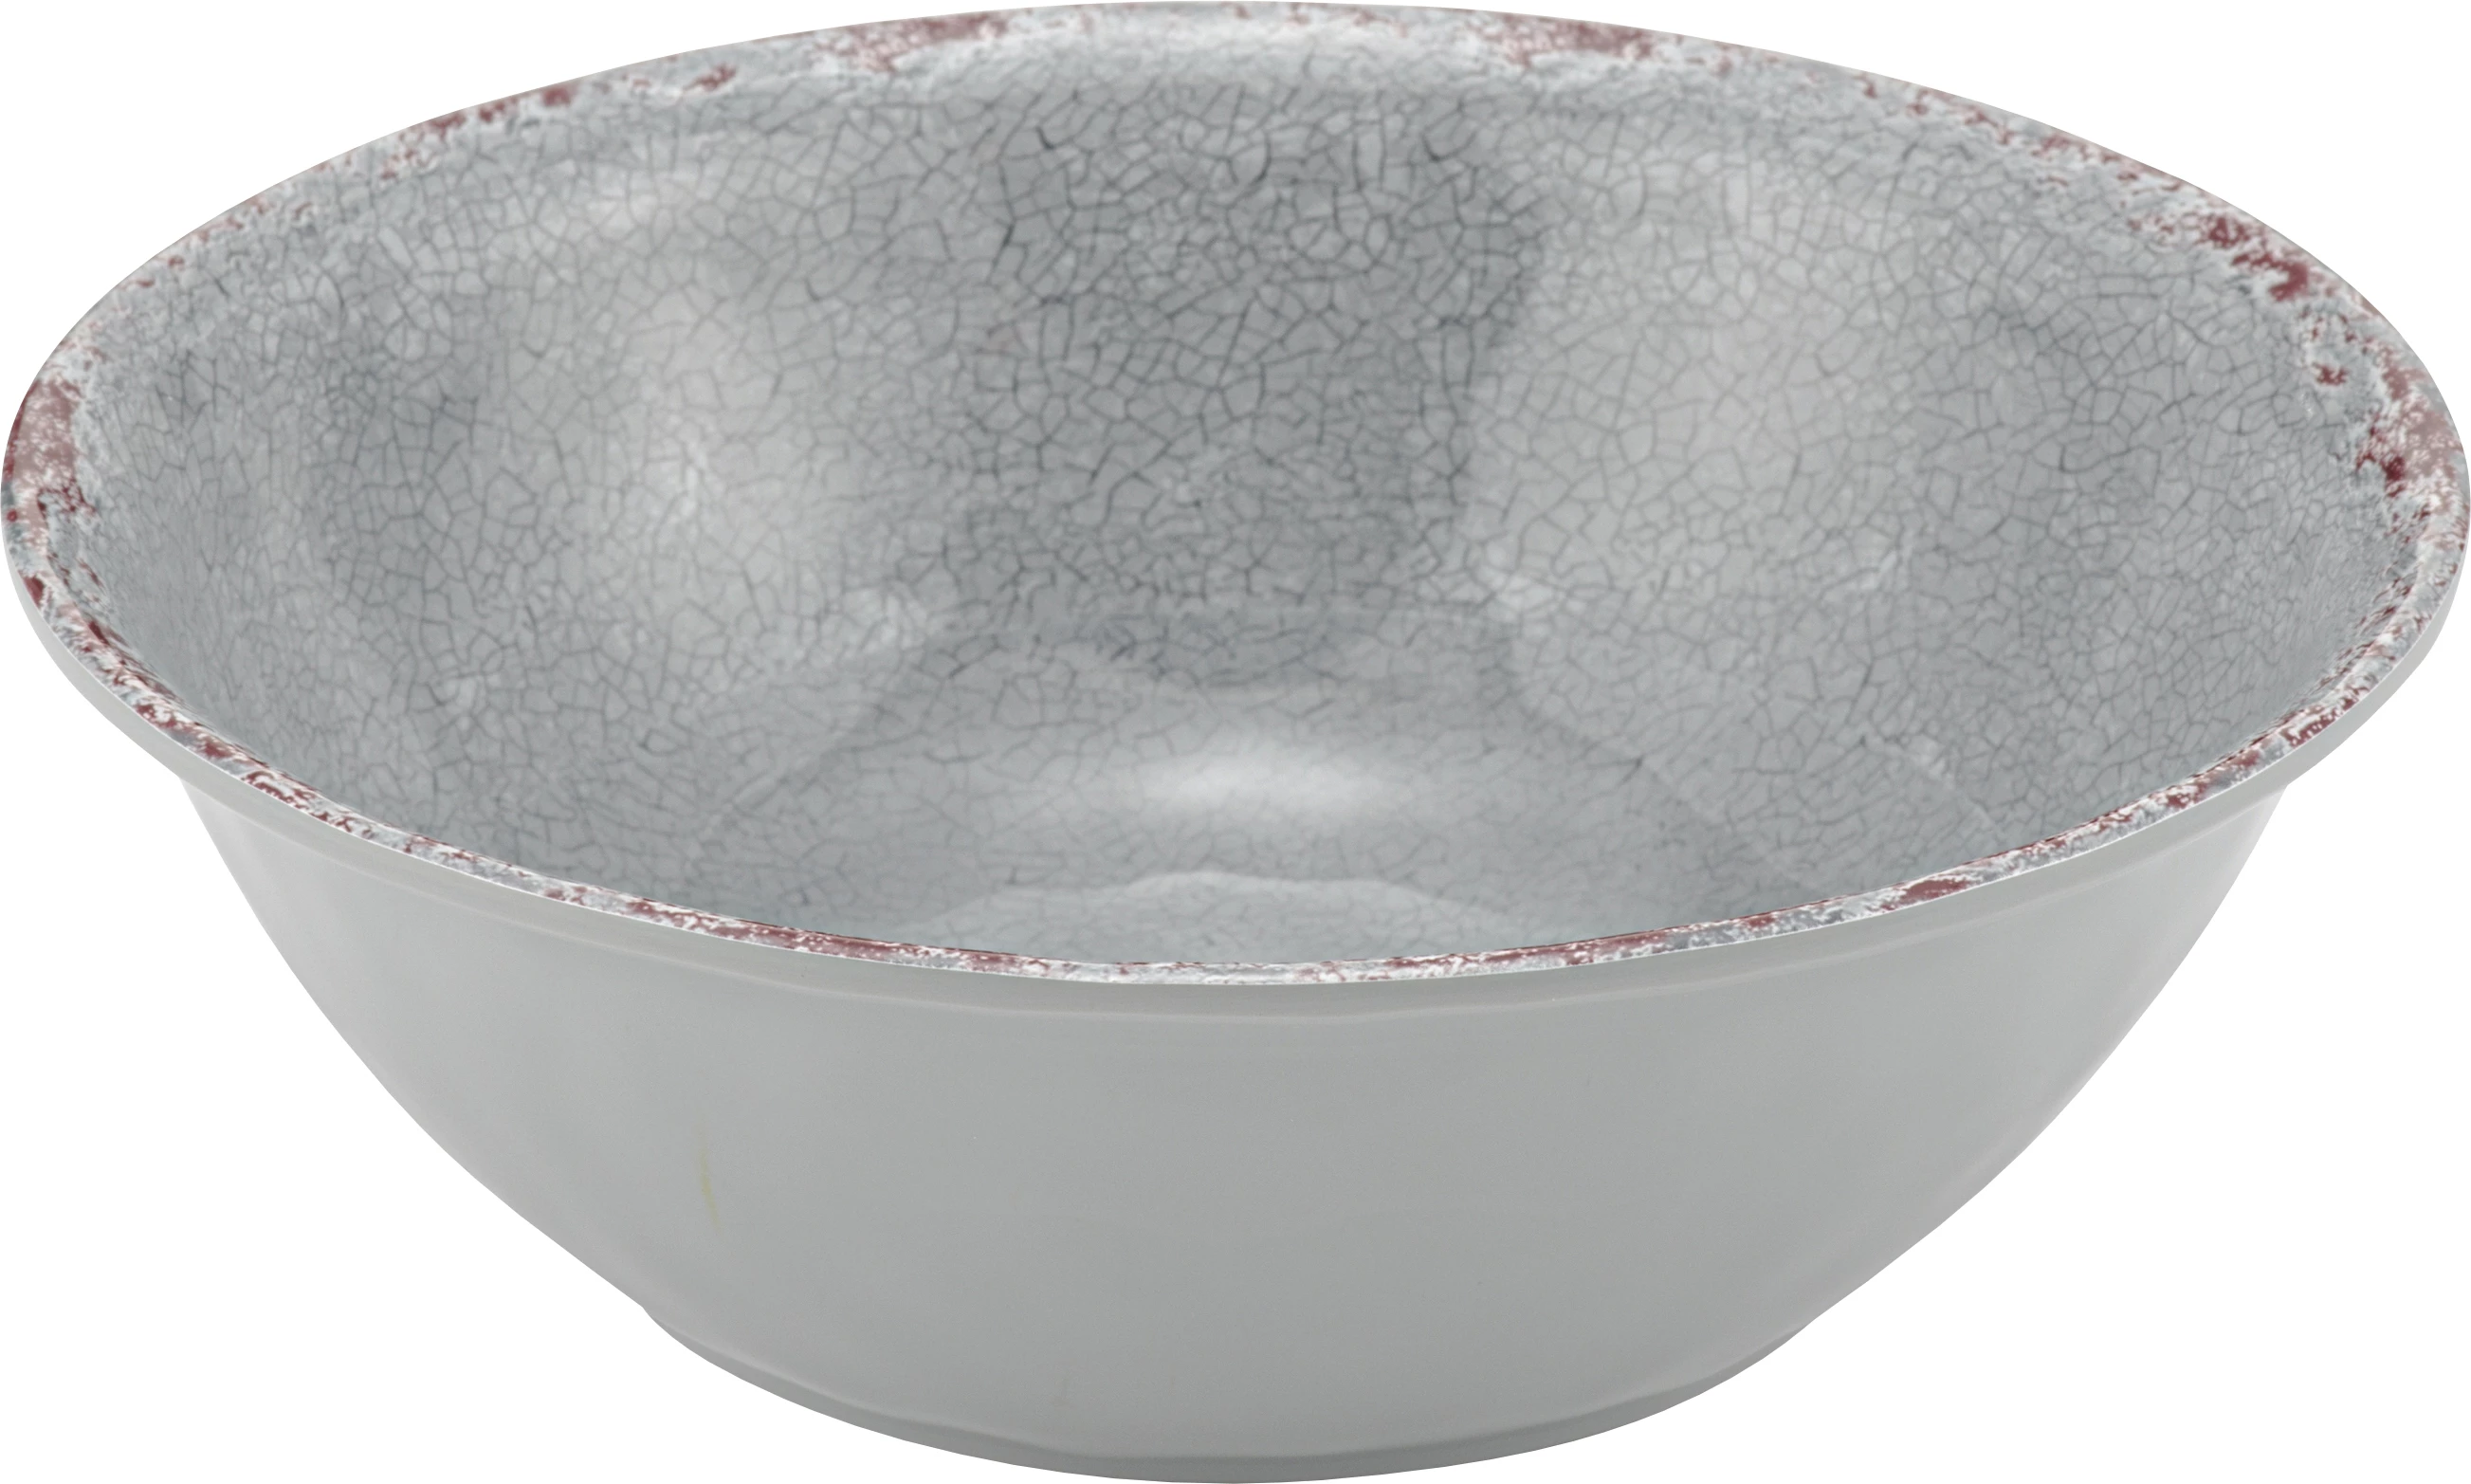 Dalebrook Casablanca skål, grå, 130 cl, ø21 cm